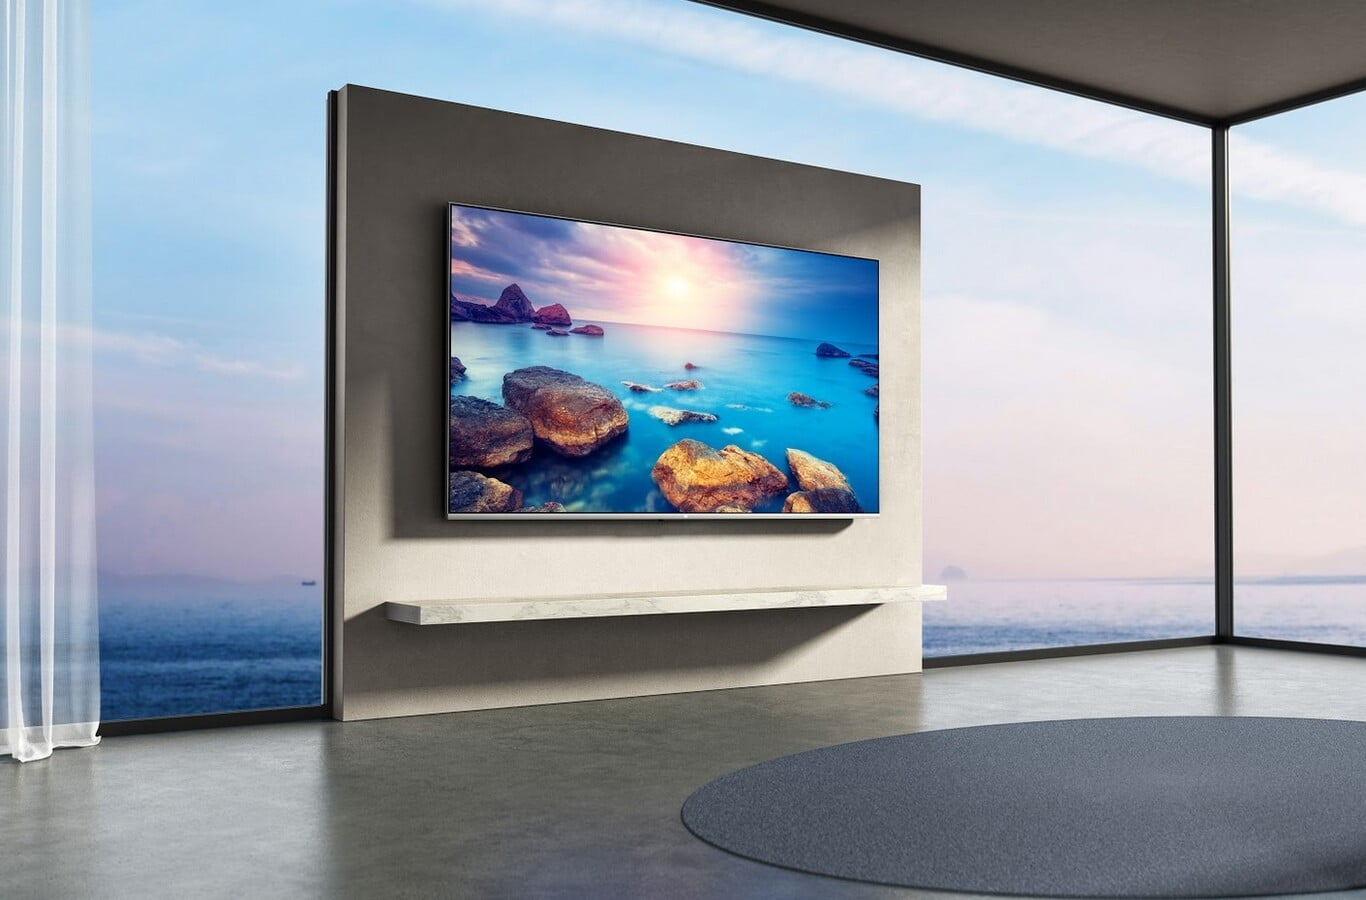 Xiaomi Mi TV Q1 75" QLED 4K Smart TV is presented: specs, price and release date